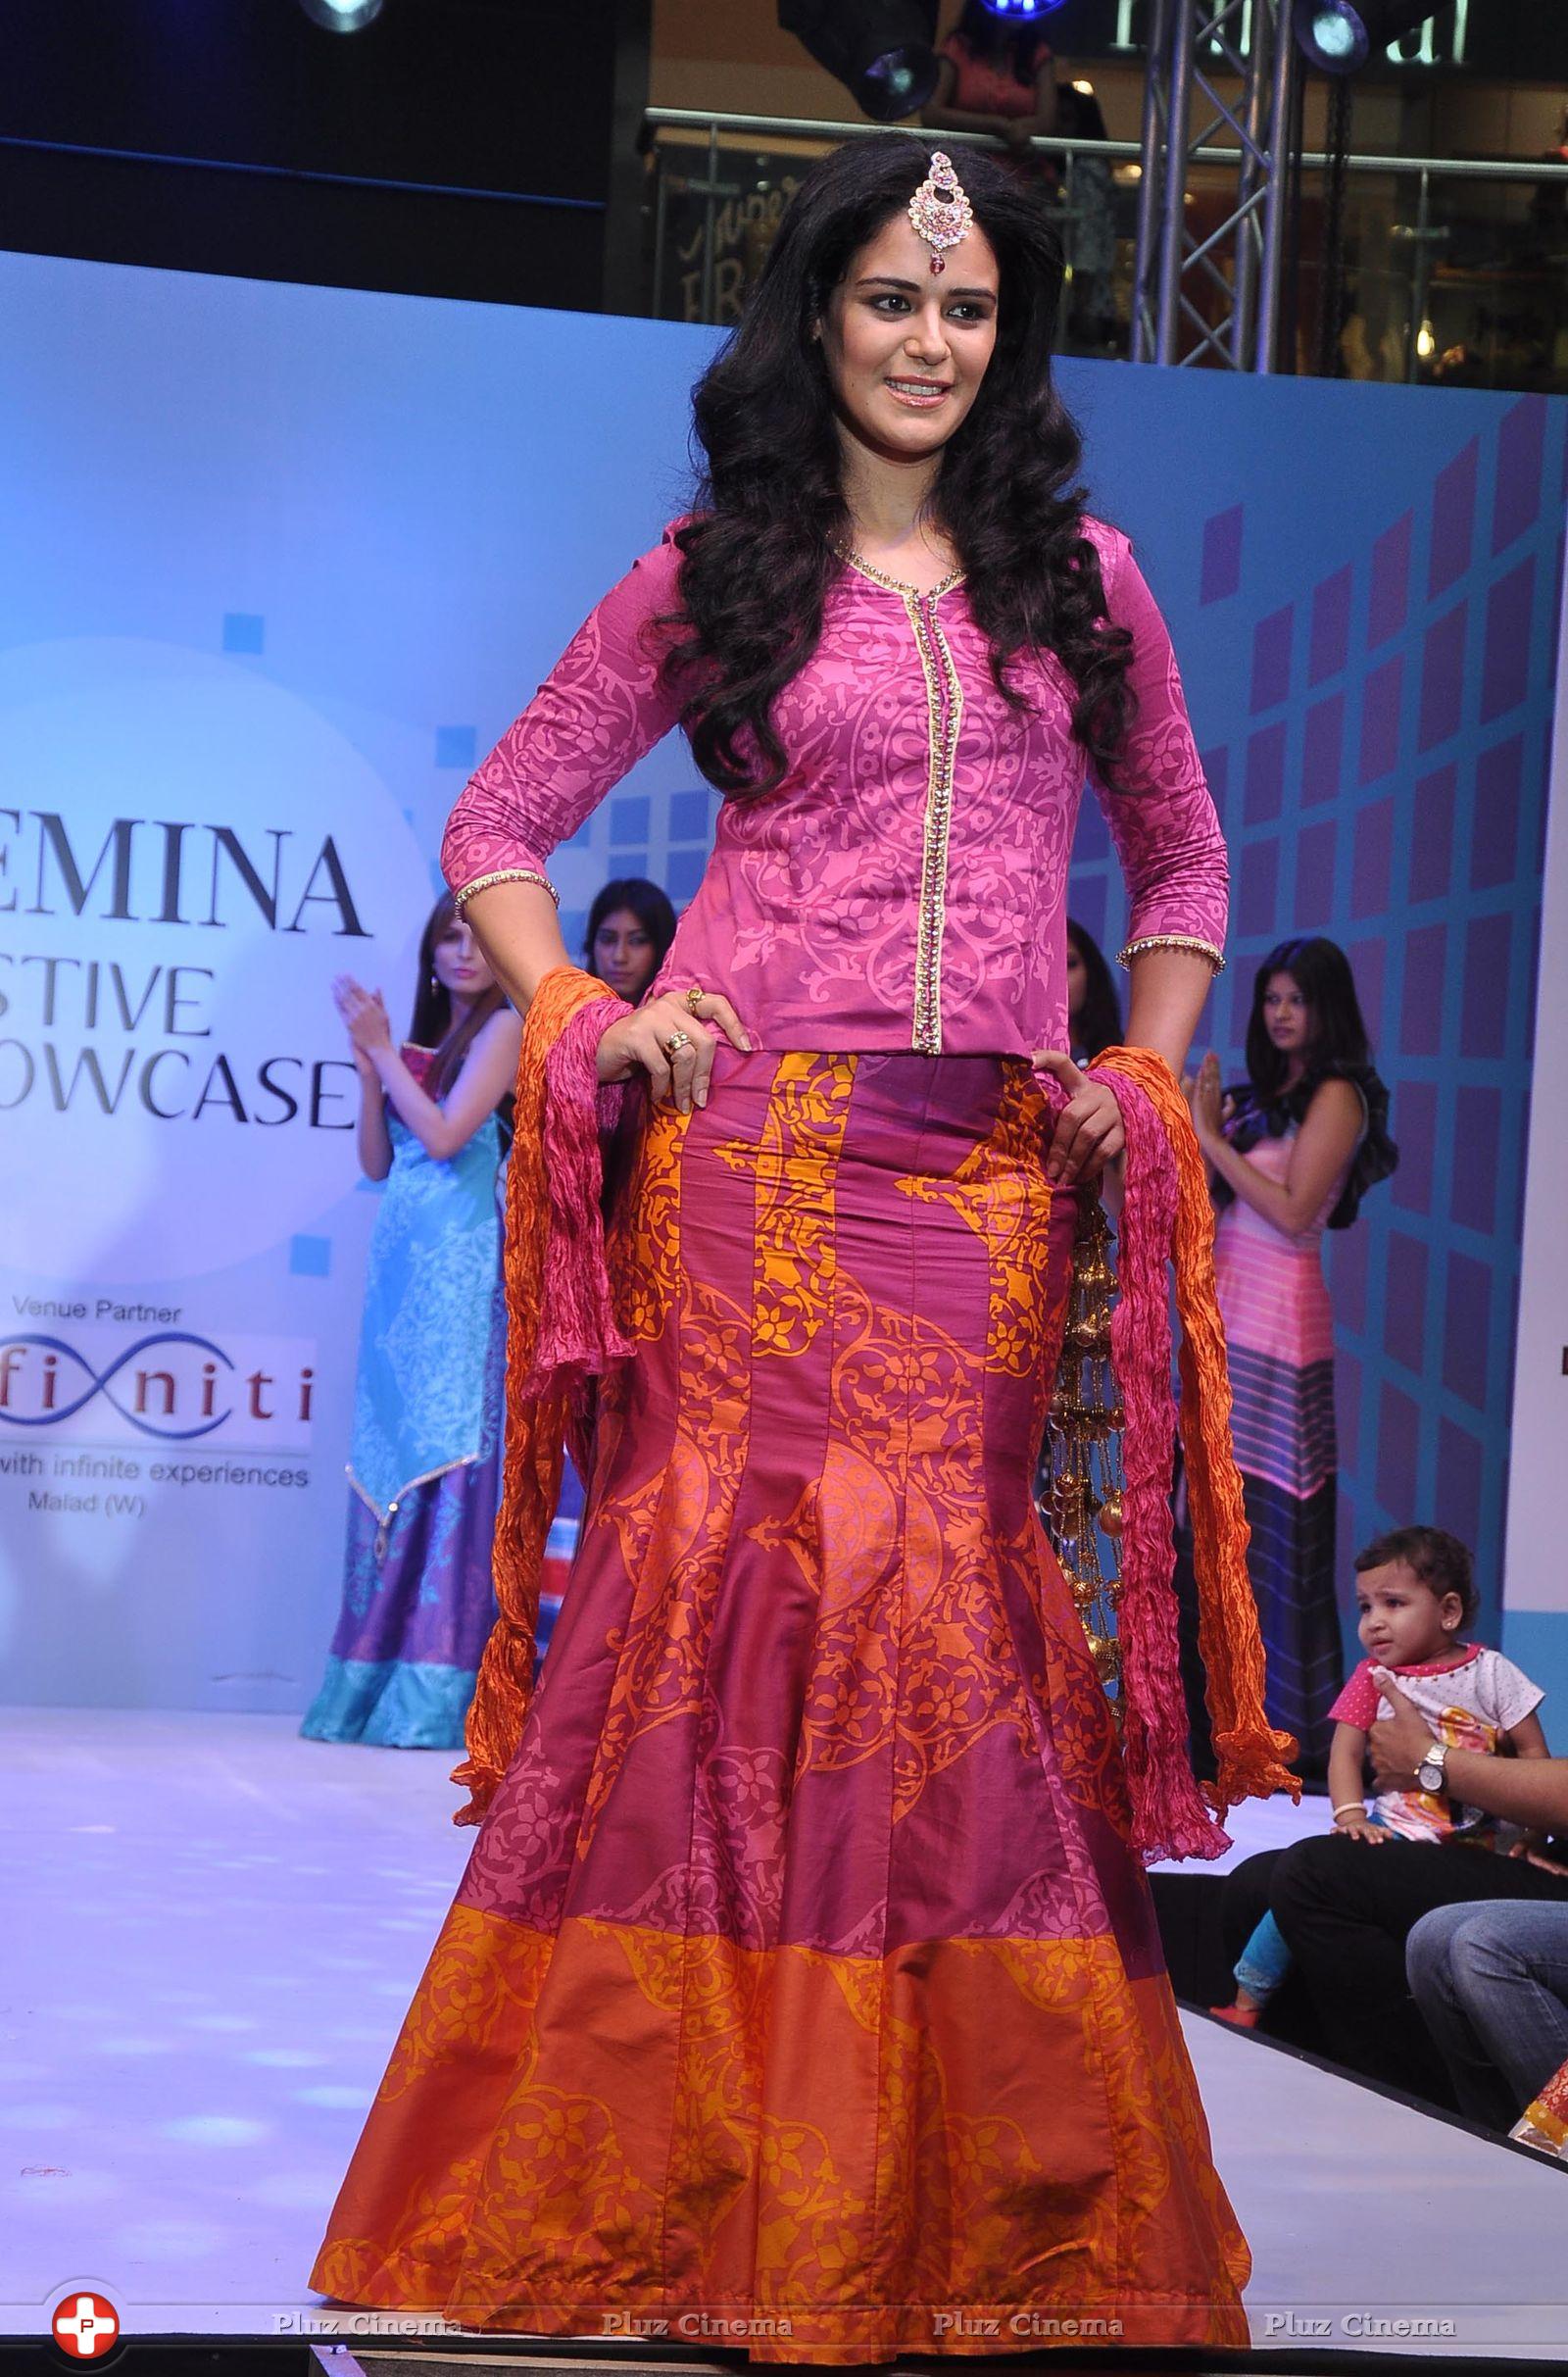 Mona Singh - Femina Festive Showcase at Infinity Malad photos | Picture 658912